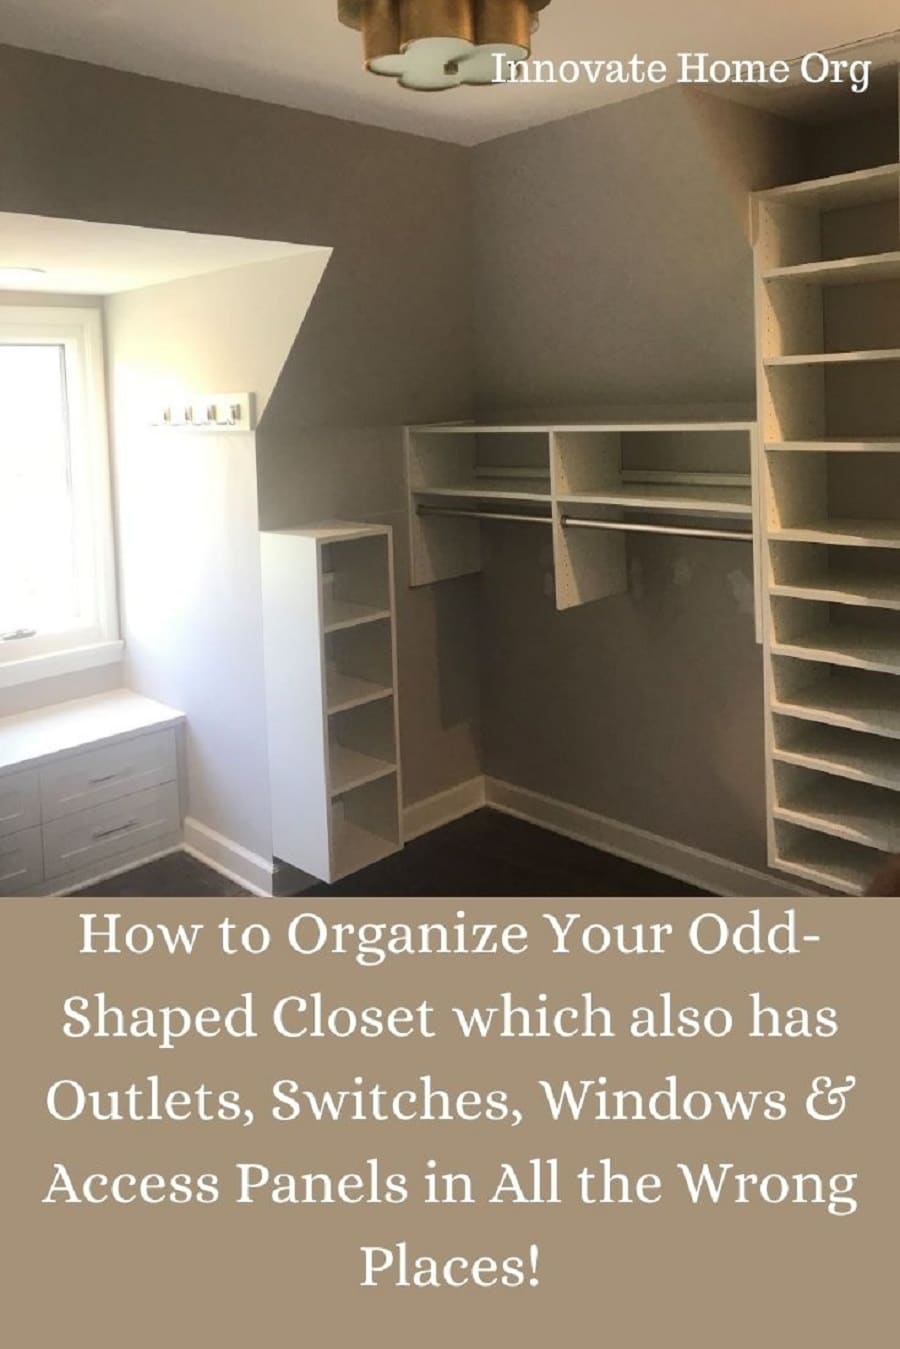 Factor 5 Organize an odd shaped closet Columubus Ohio Innovate Home Org #OddShapedCloset #OddShapedClosetOrganization #OddShapedClosetLayout